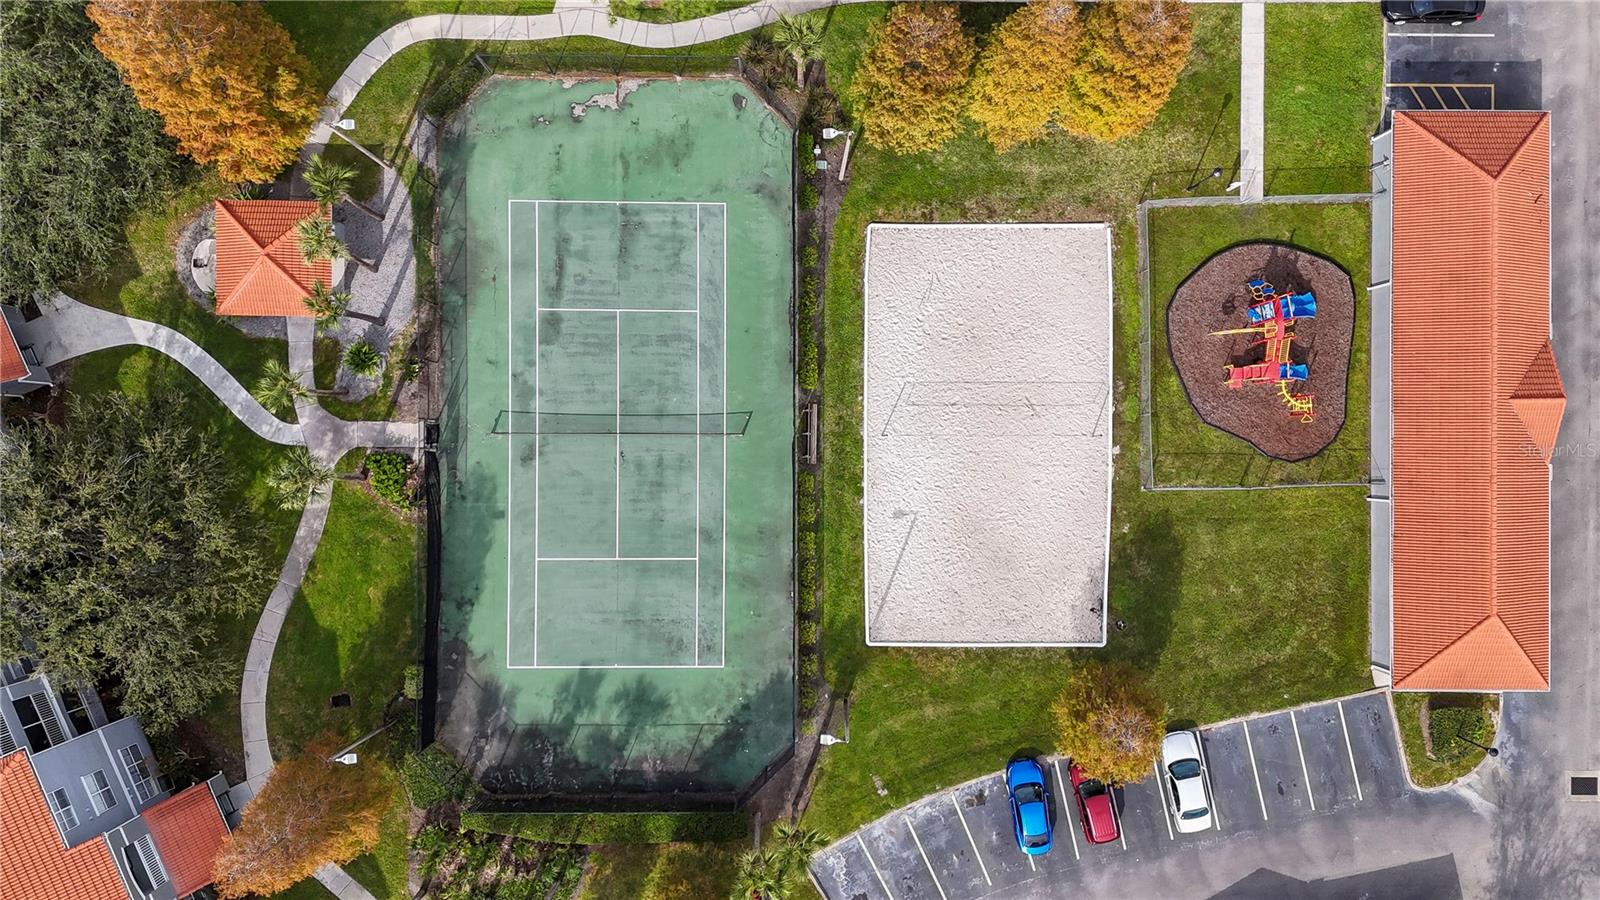 Playground, Volleyball Court and Tennis Court